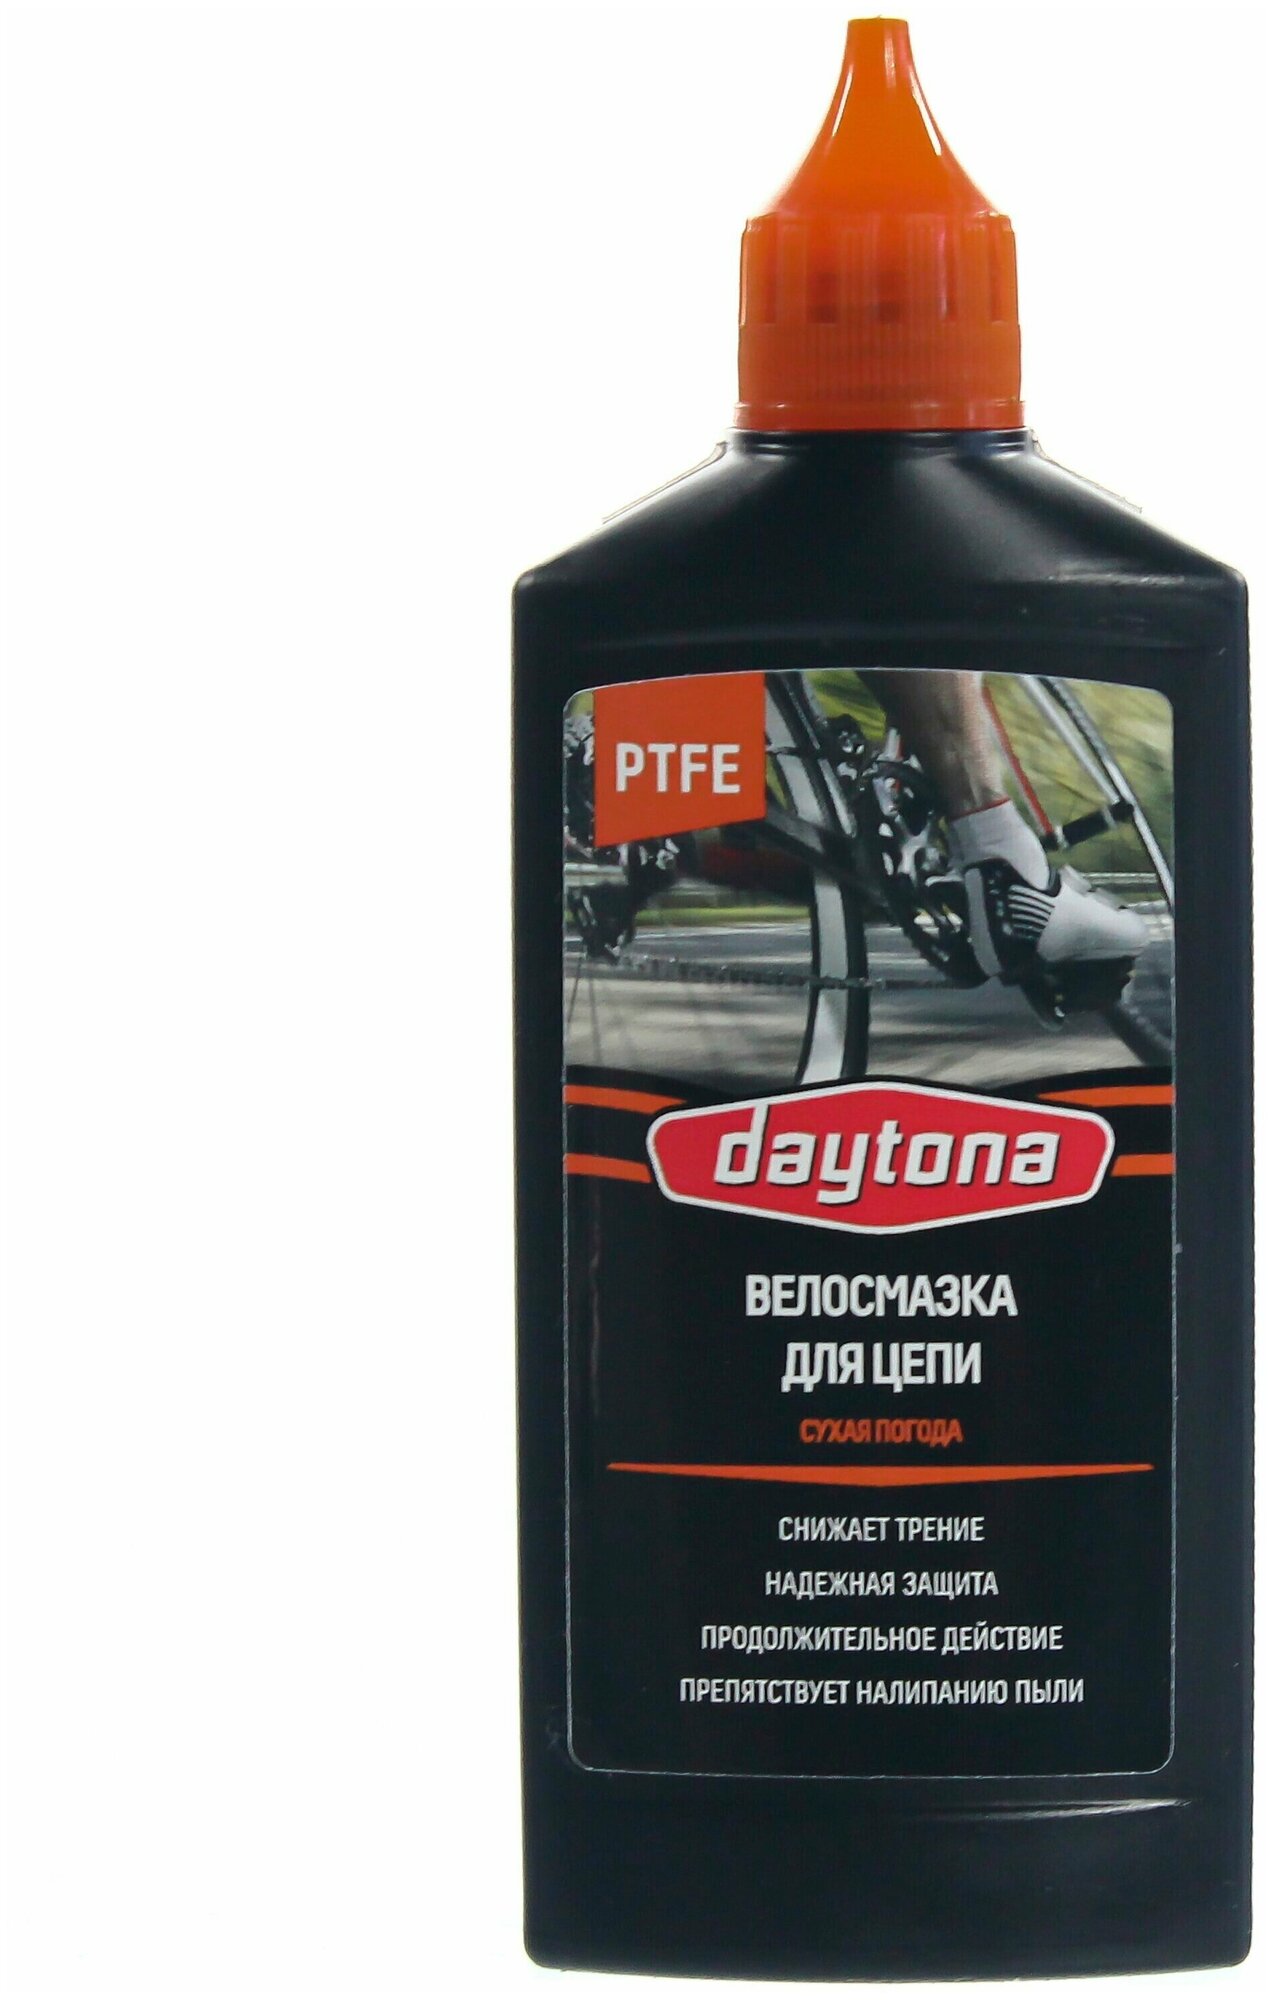 Смазка Daytona для цепи с тефлоном 100мл. Для сухой погоды.